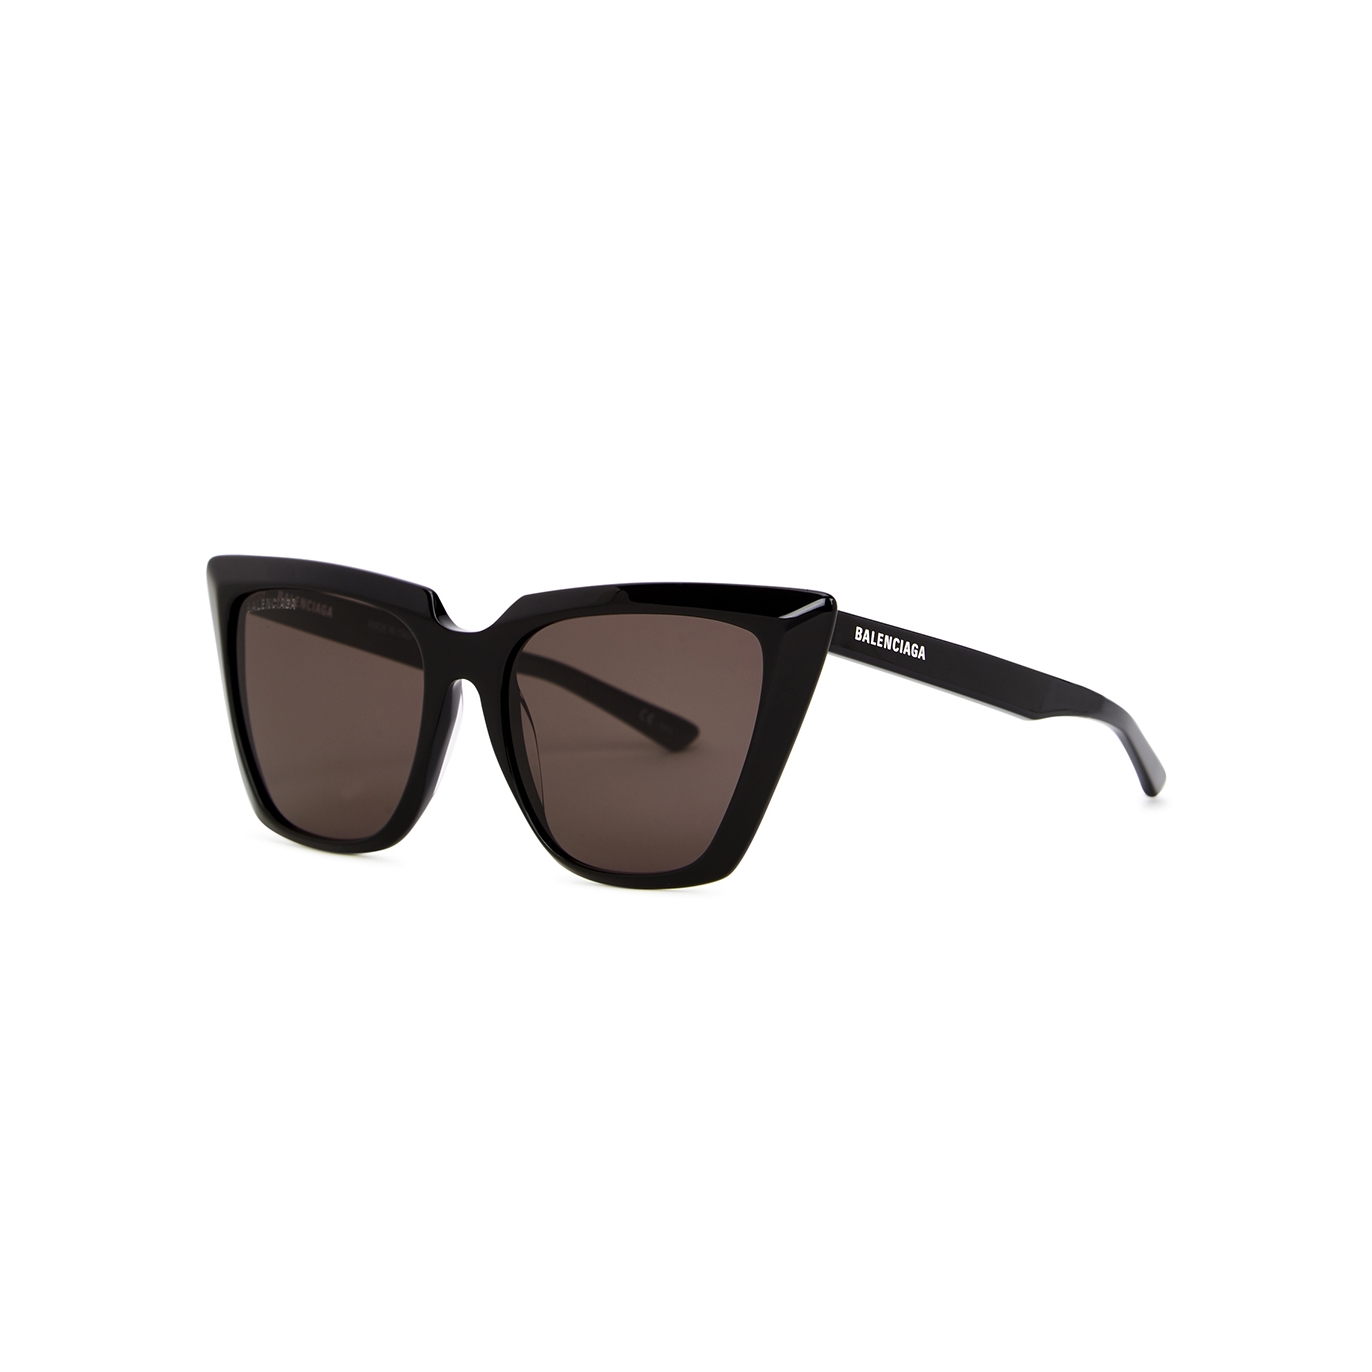 Balenciaga Black Oversized Cat-eye Sunglasses, Sunglasses, Black